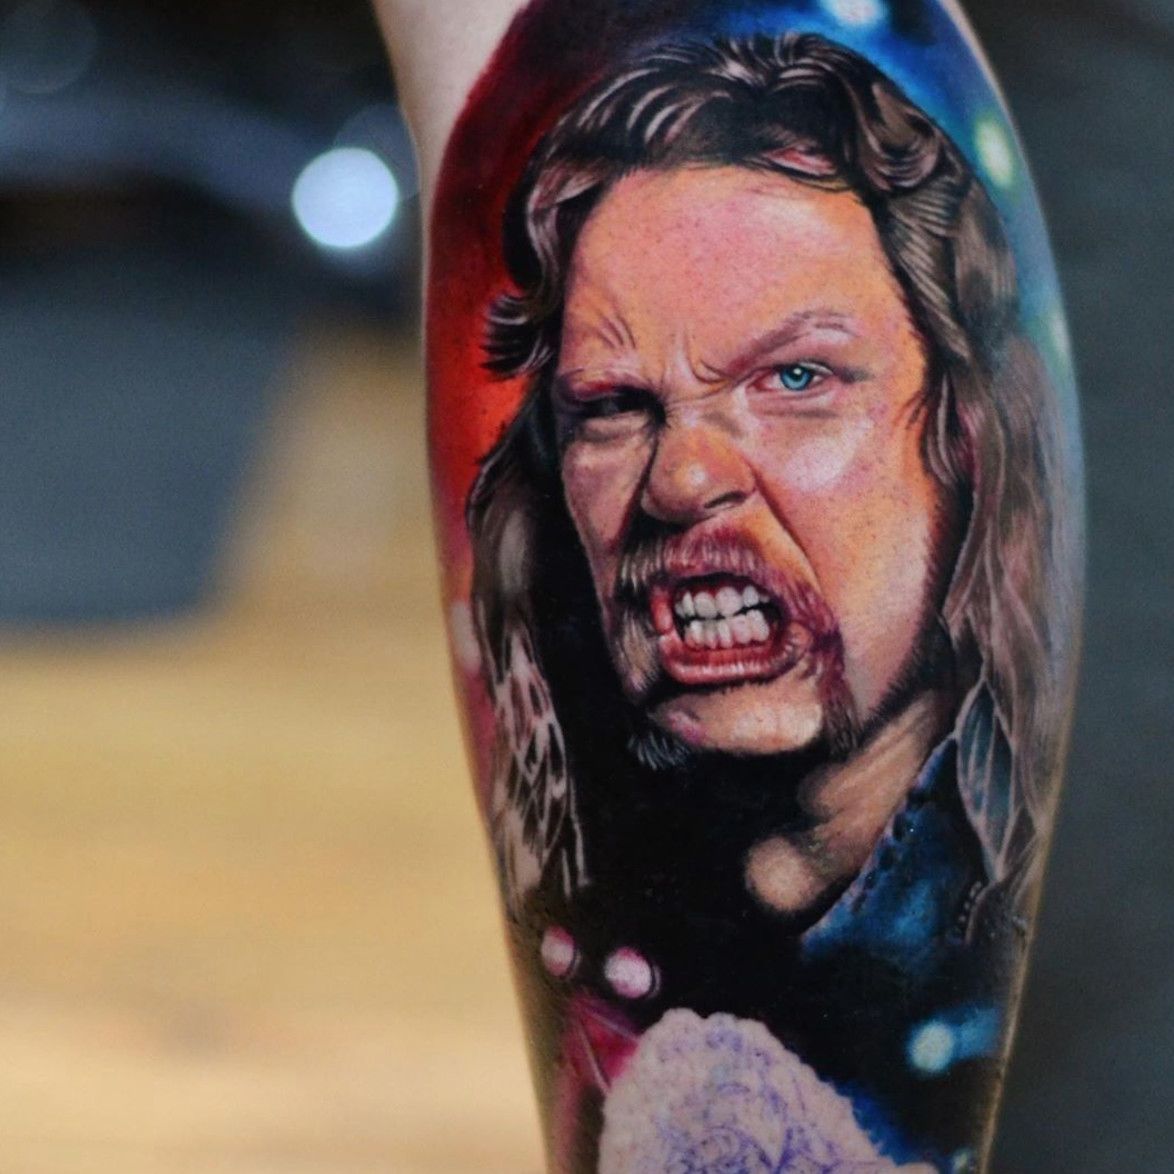 Tattoo portrait of James Hetfield